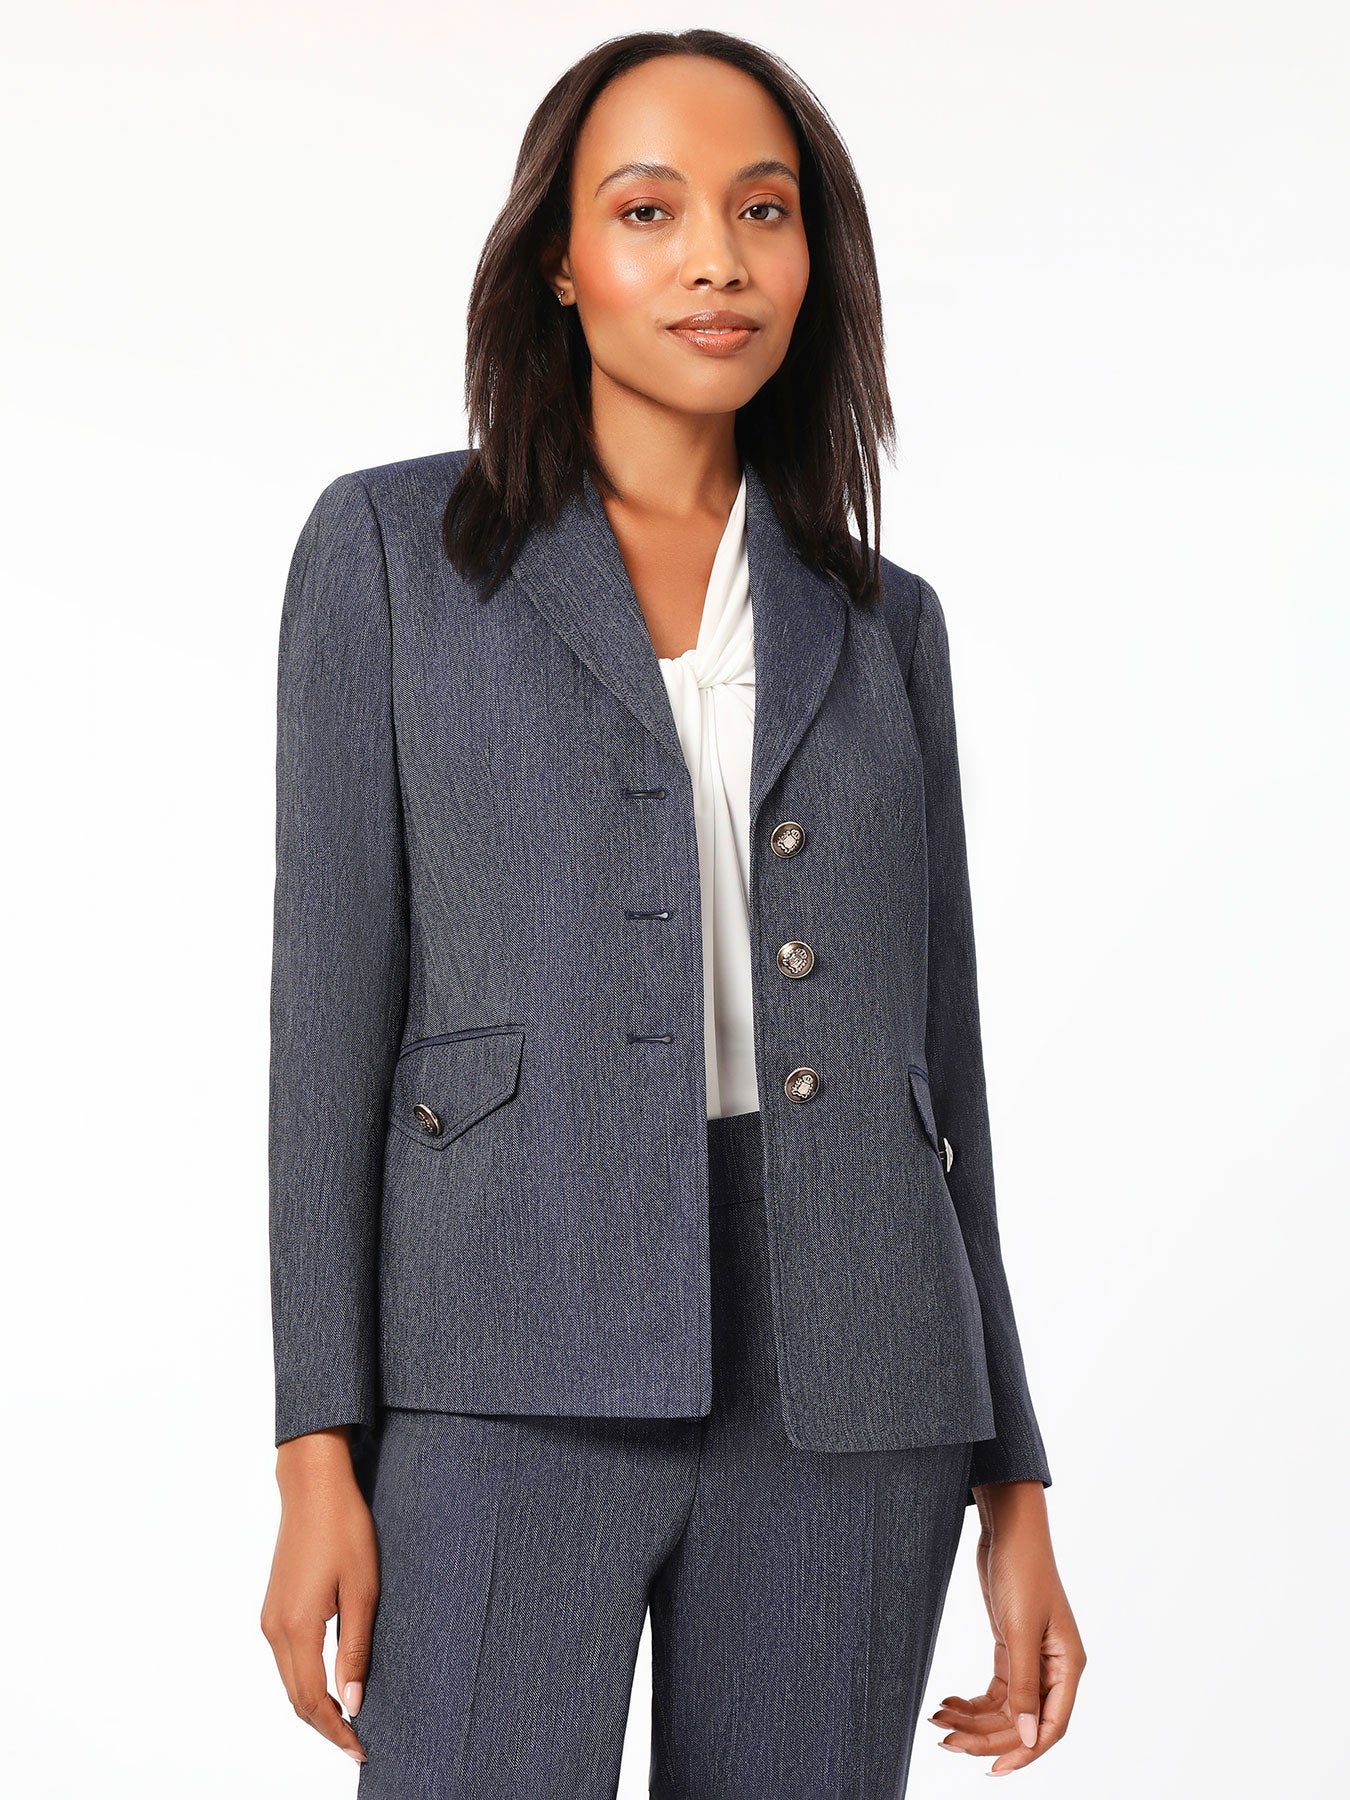 Kasper Women's Size Two Button Jacket, Grey/Black, 12 Petite at